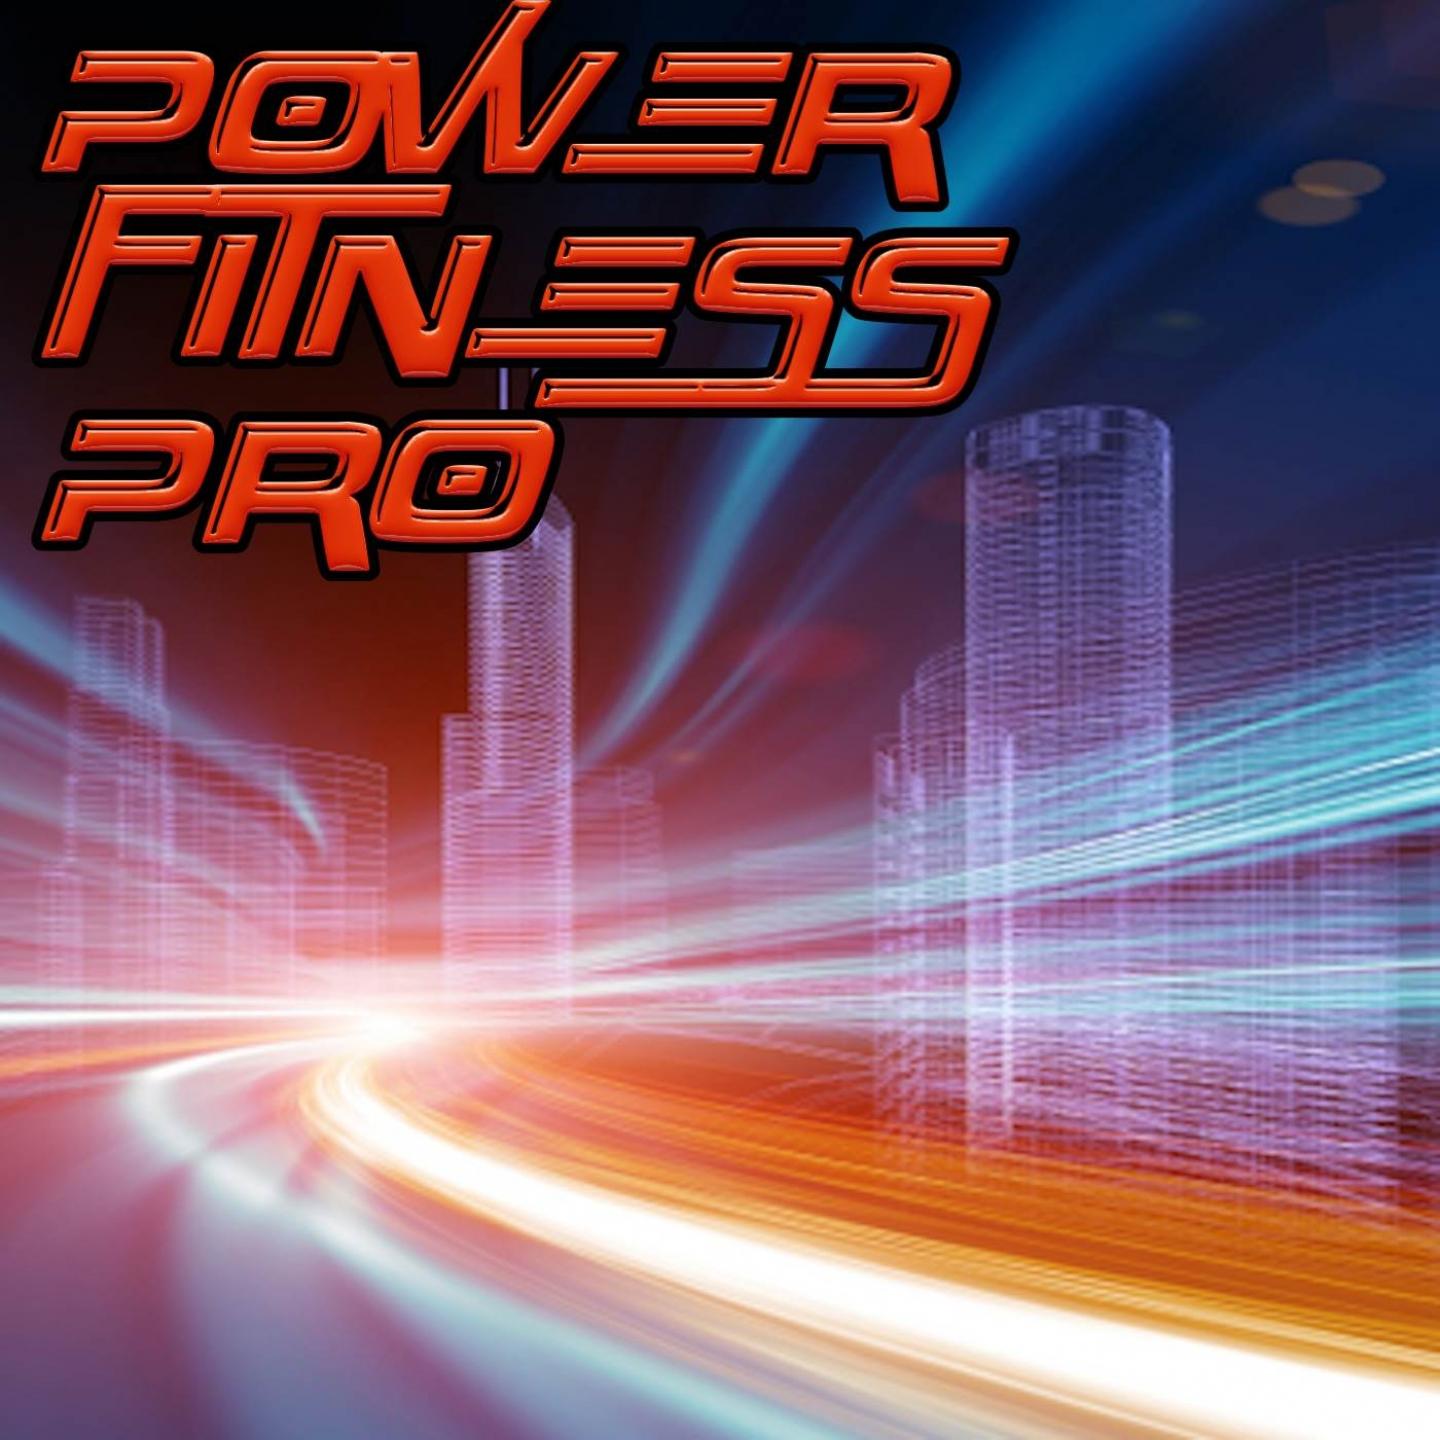 Power Fitness Pro, Vol. 2